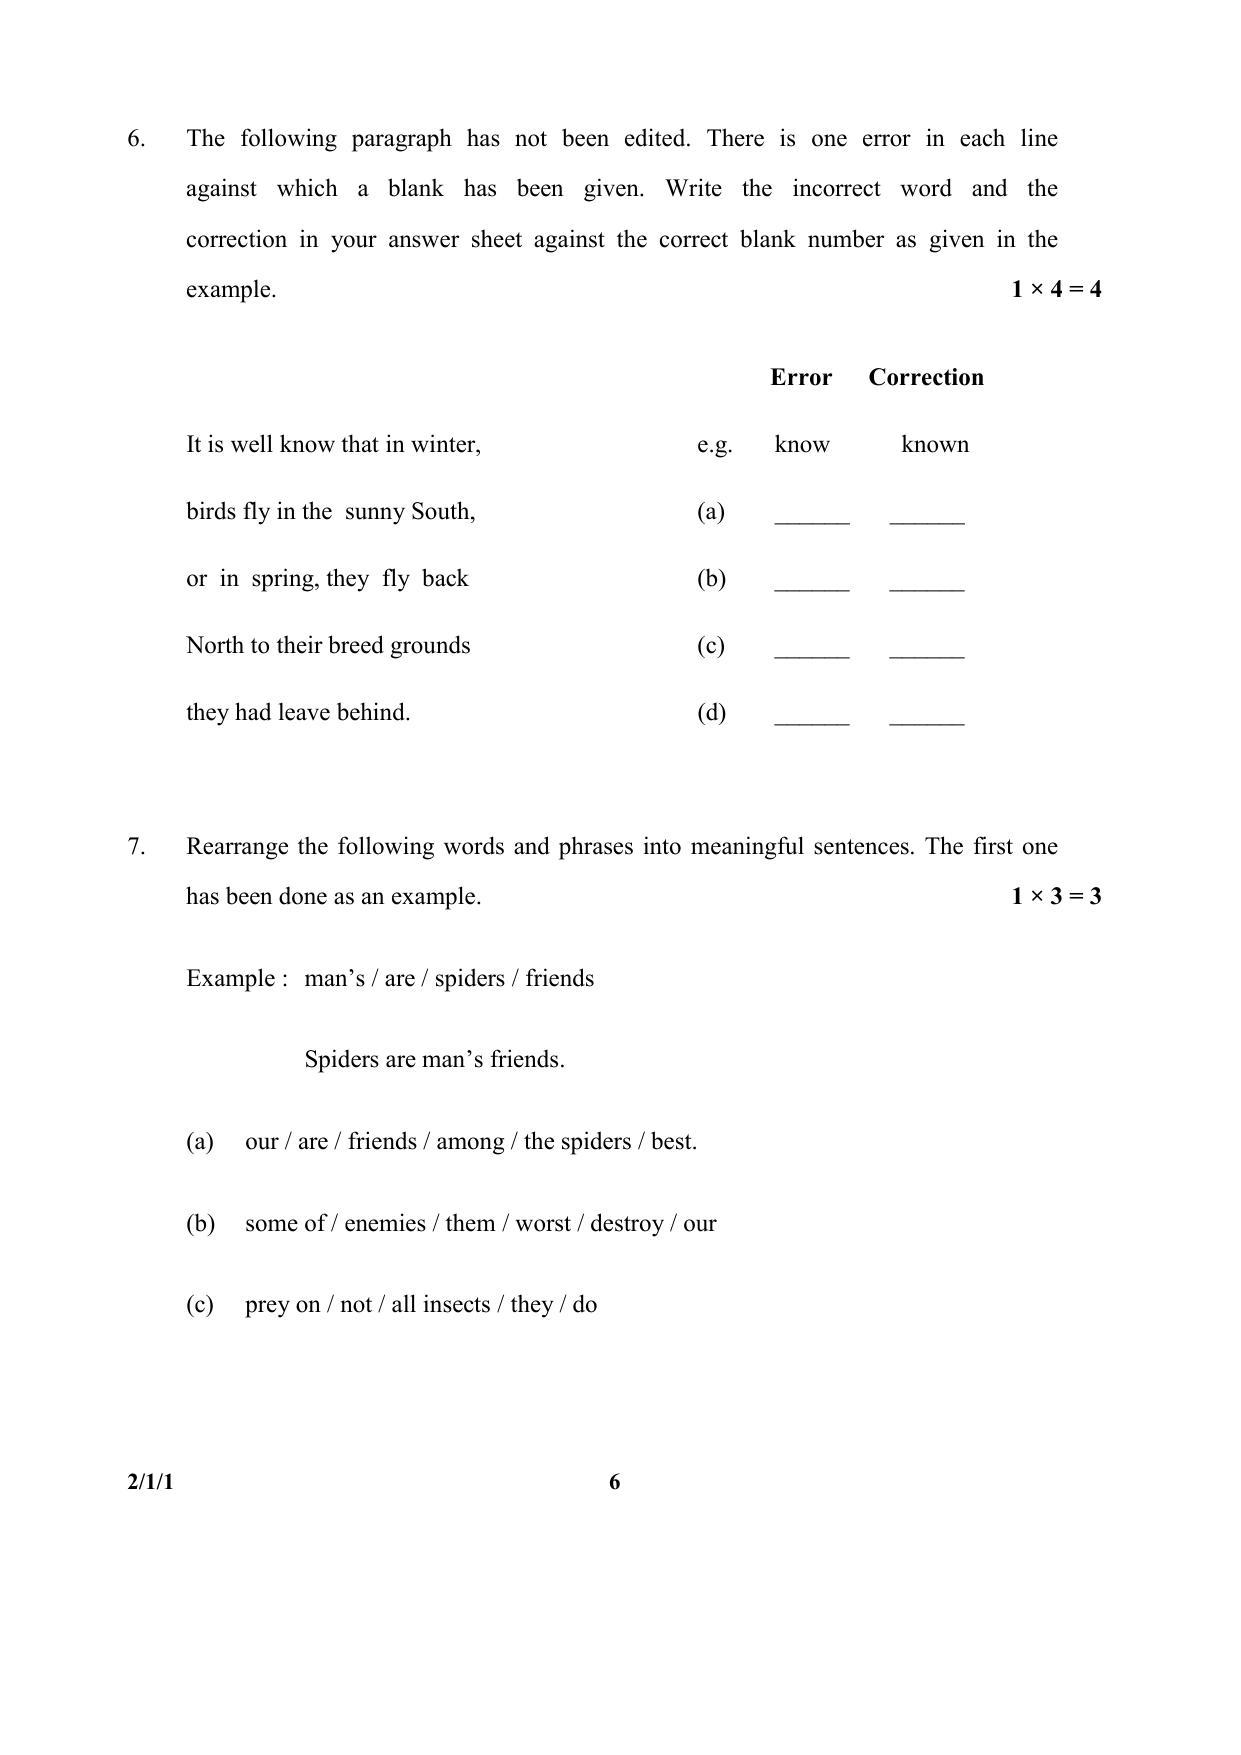 CBSE Class 10 2-1-1 (English Lan. & Lit.) 2017-comptt Question Paper - Page 6